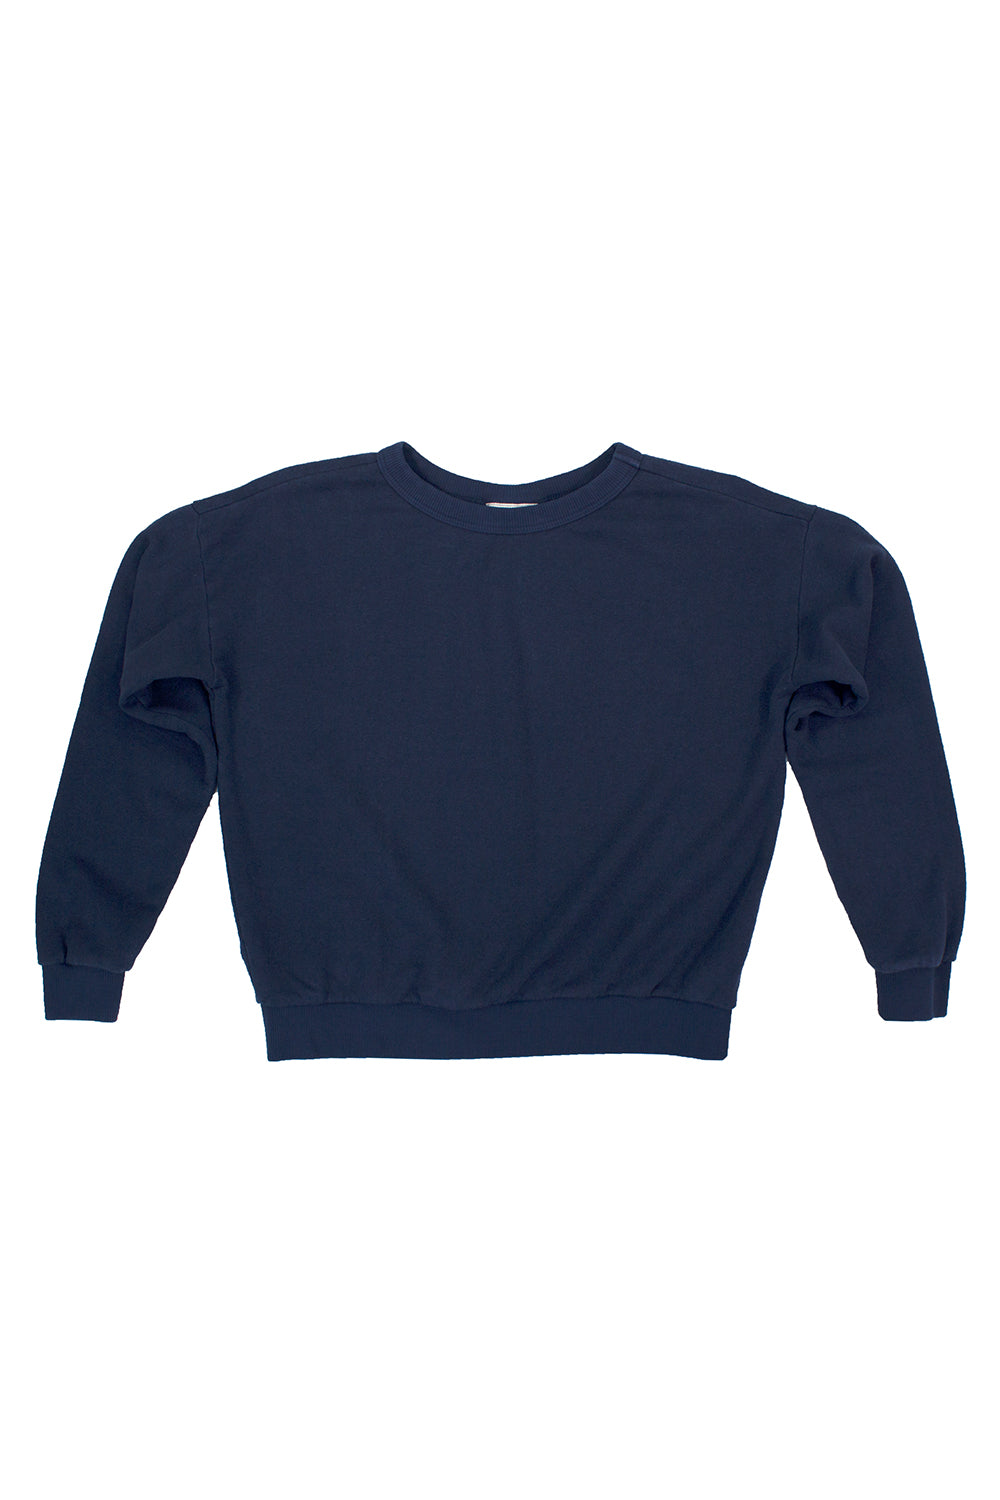 Laguna Cropped Sweatshirt | Jungmaven Hemp Clothing & Accessories / Color: Navy